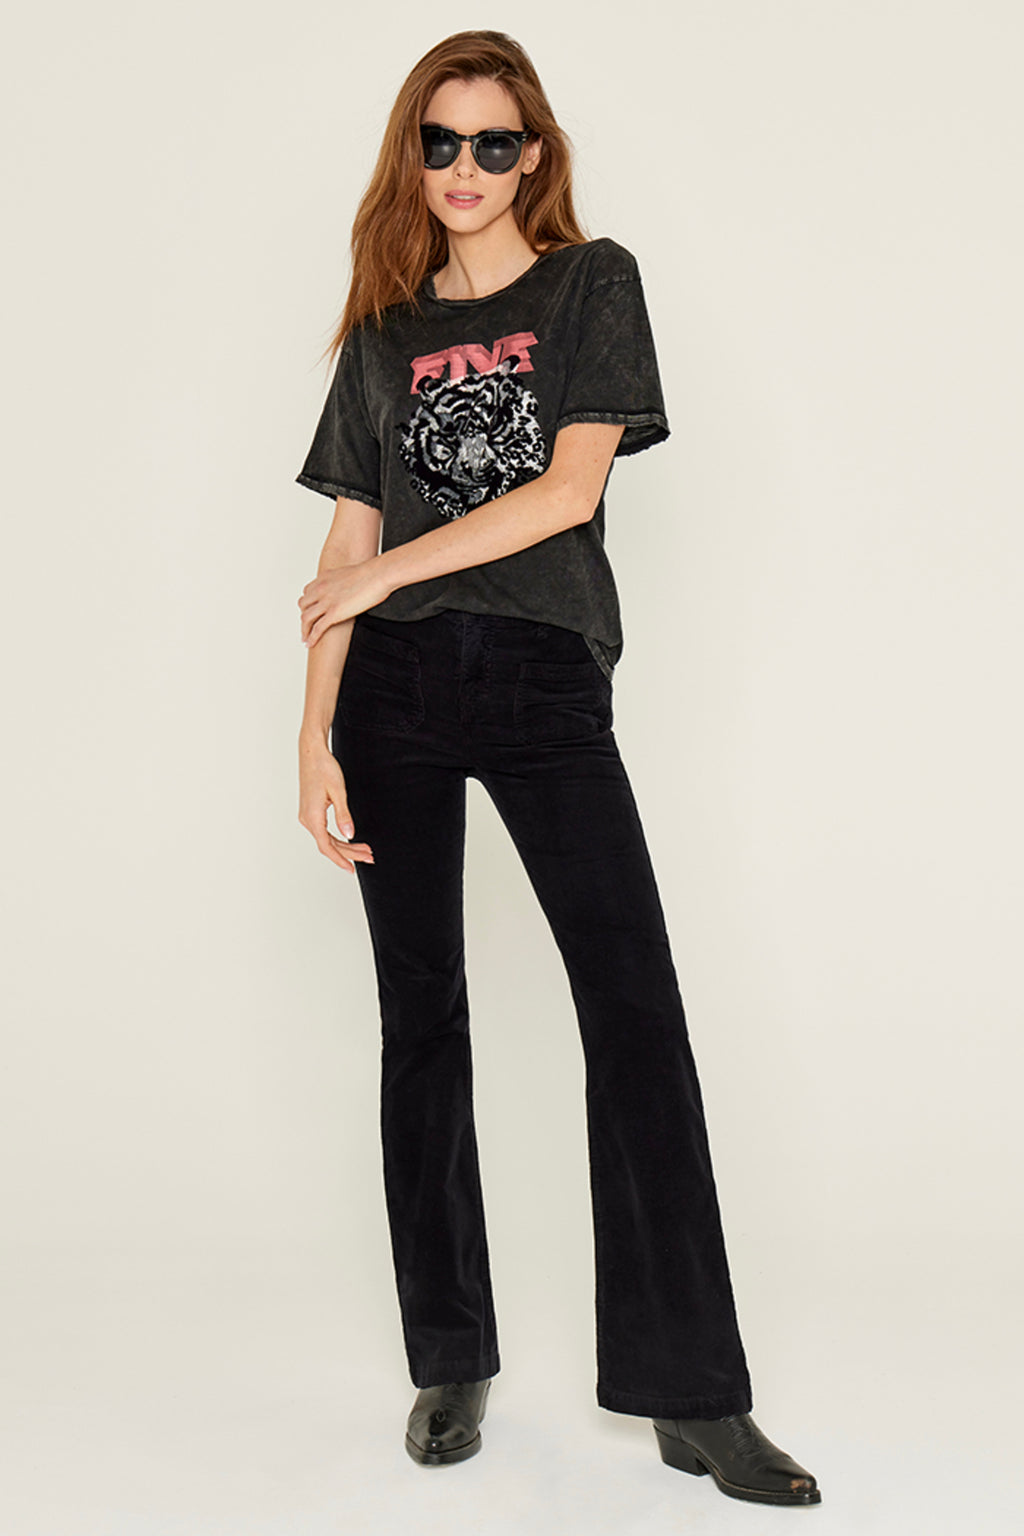 Five Jeans Bootleg LUNA Pin Cord Black. - Sub Couture